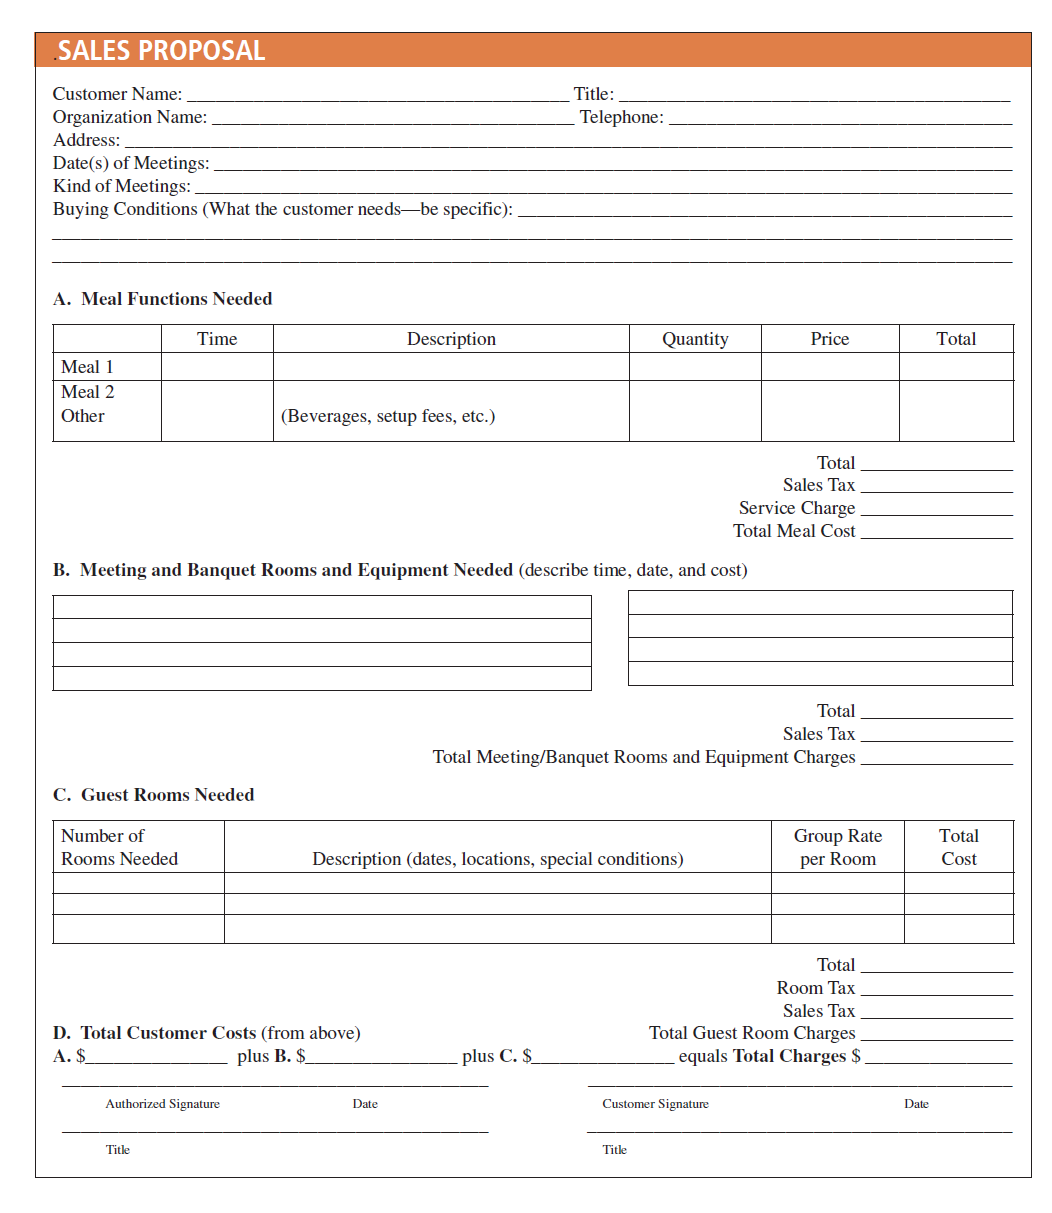 A ‘Sales Proposal’ form.